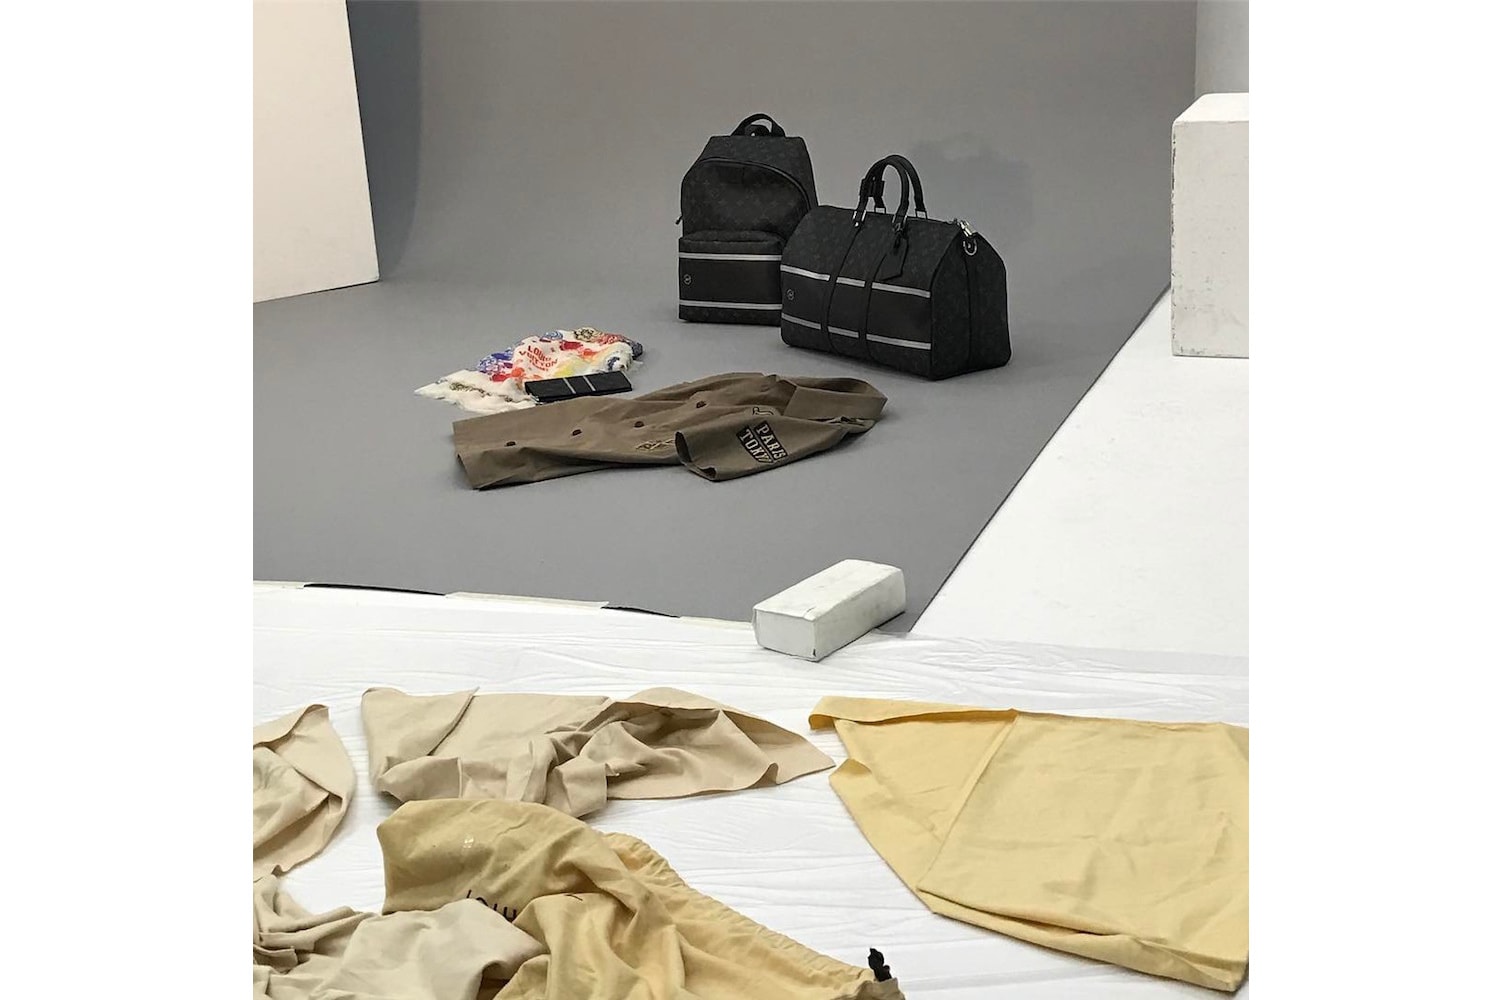 fragment design x Louis Vuitton Reveal Collaboration Release Date